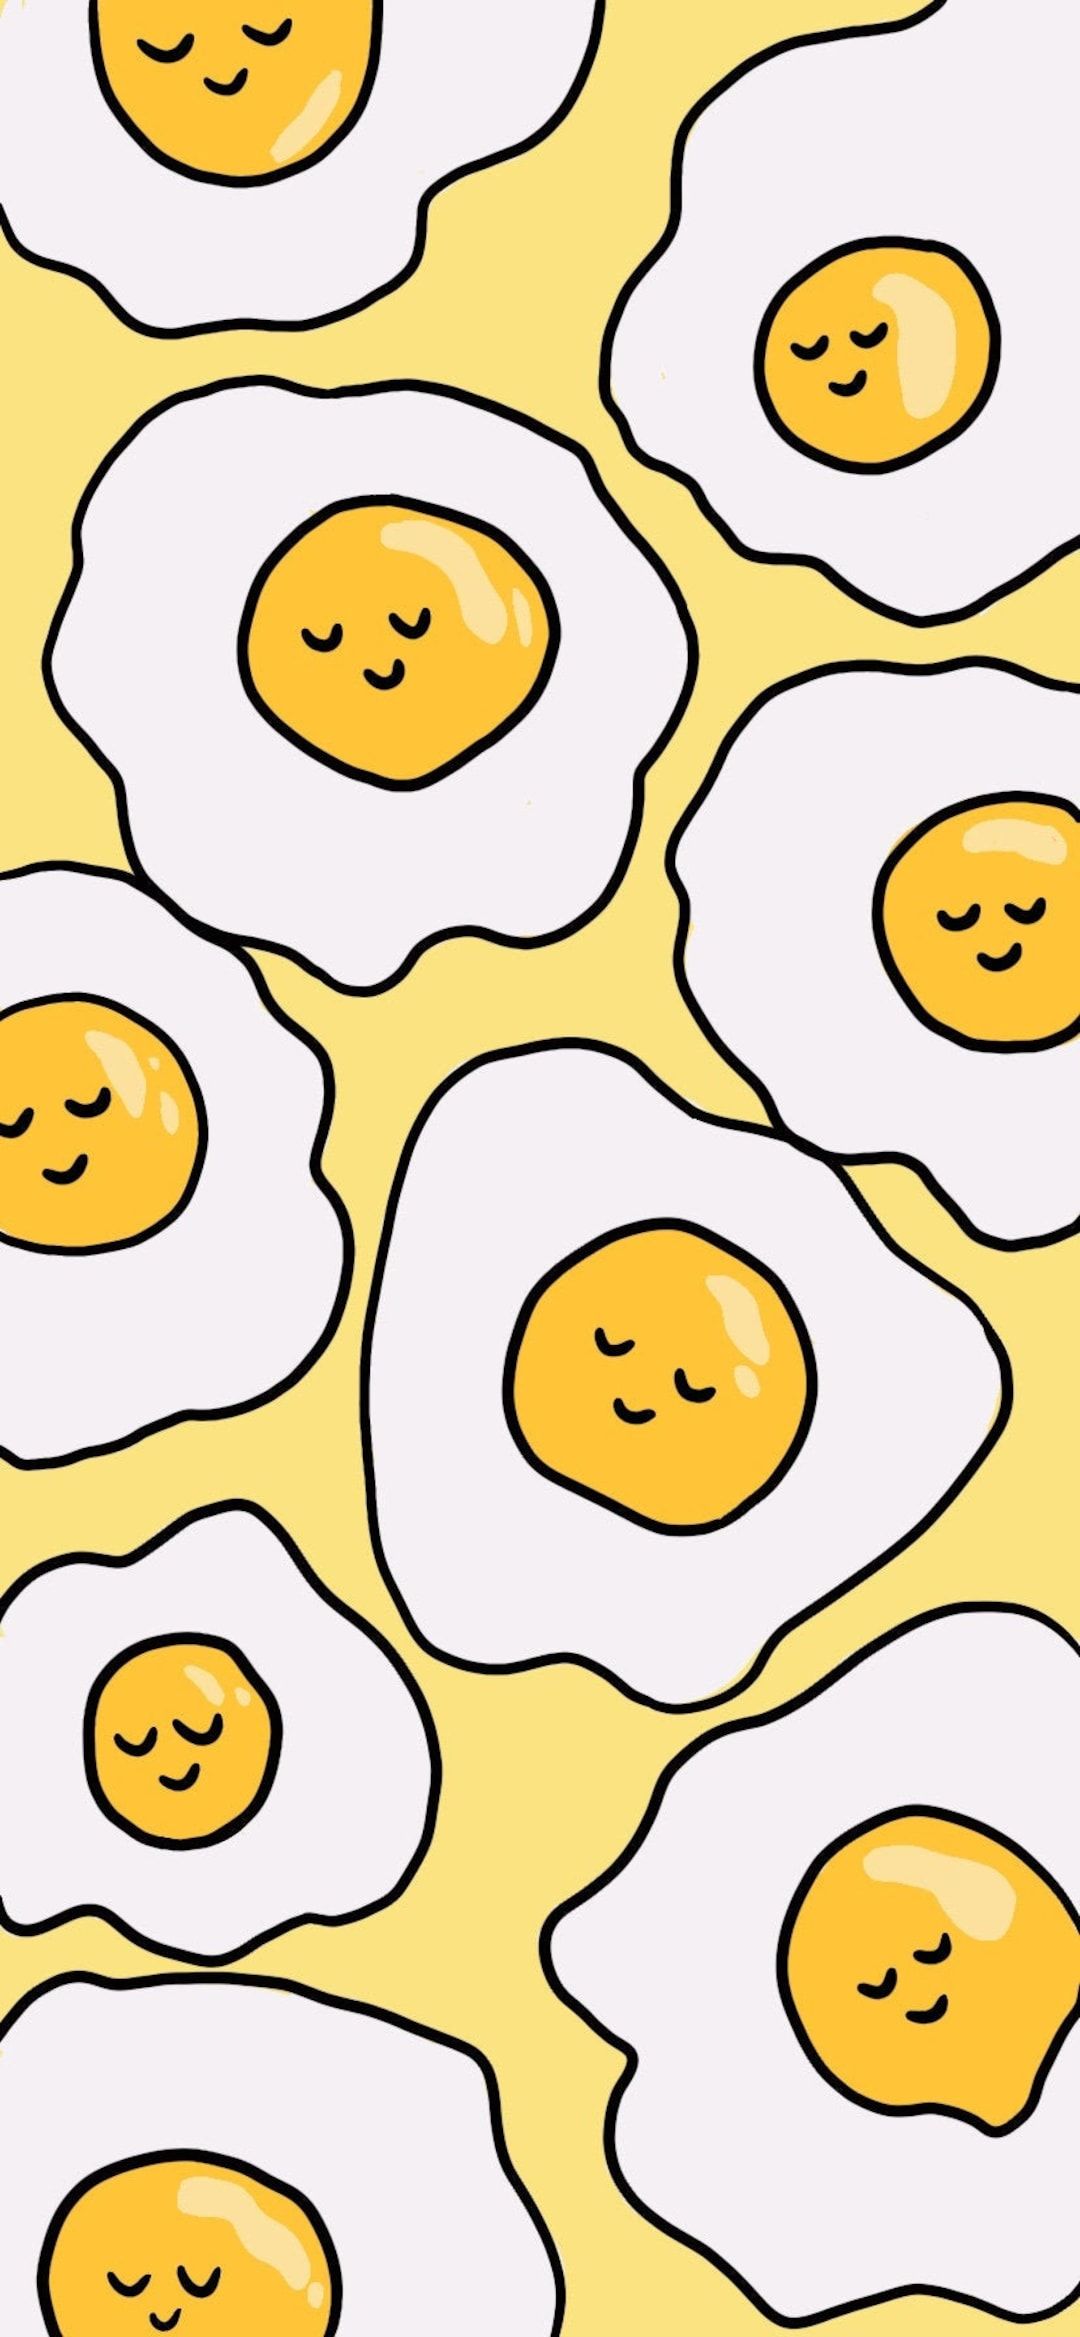 Fried eggs pattern wallpaper for iPhone - Egg